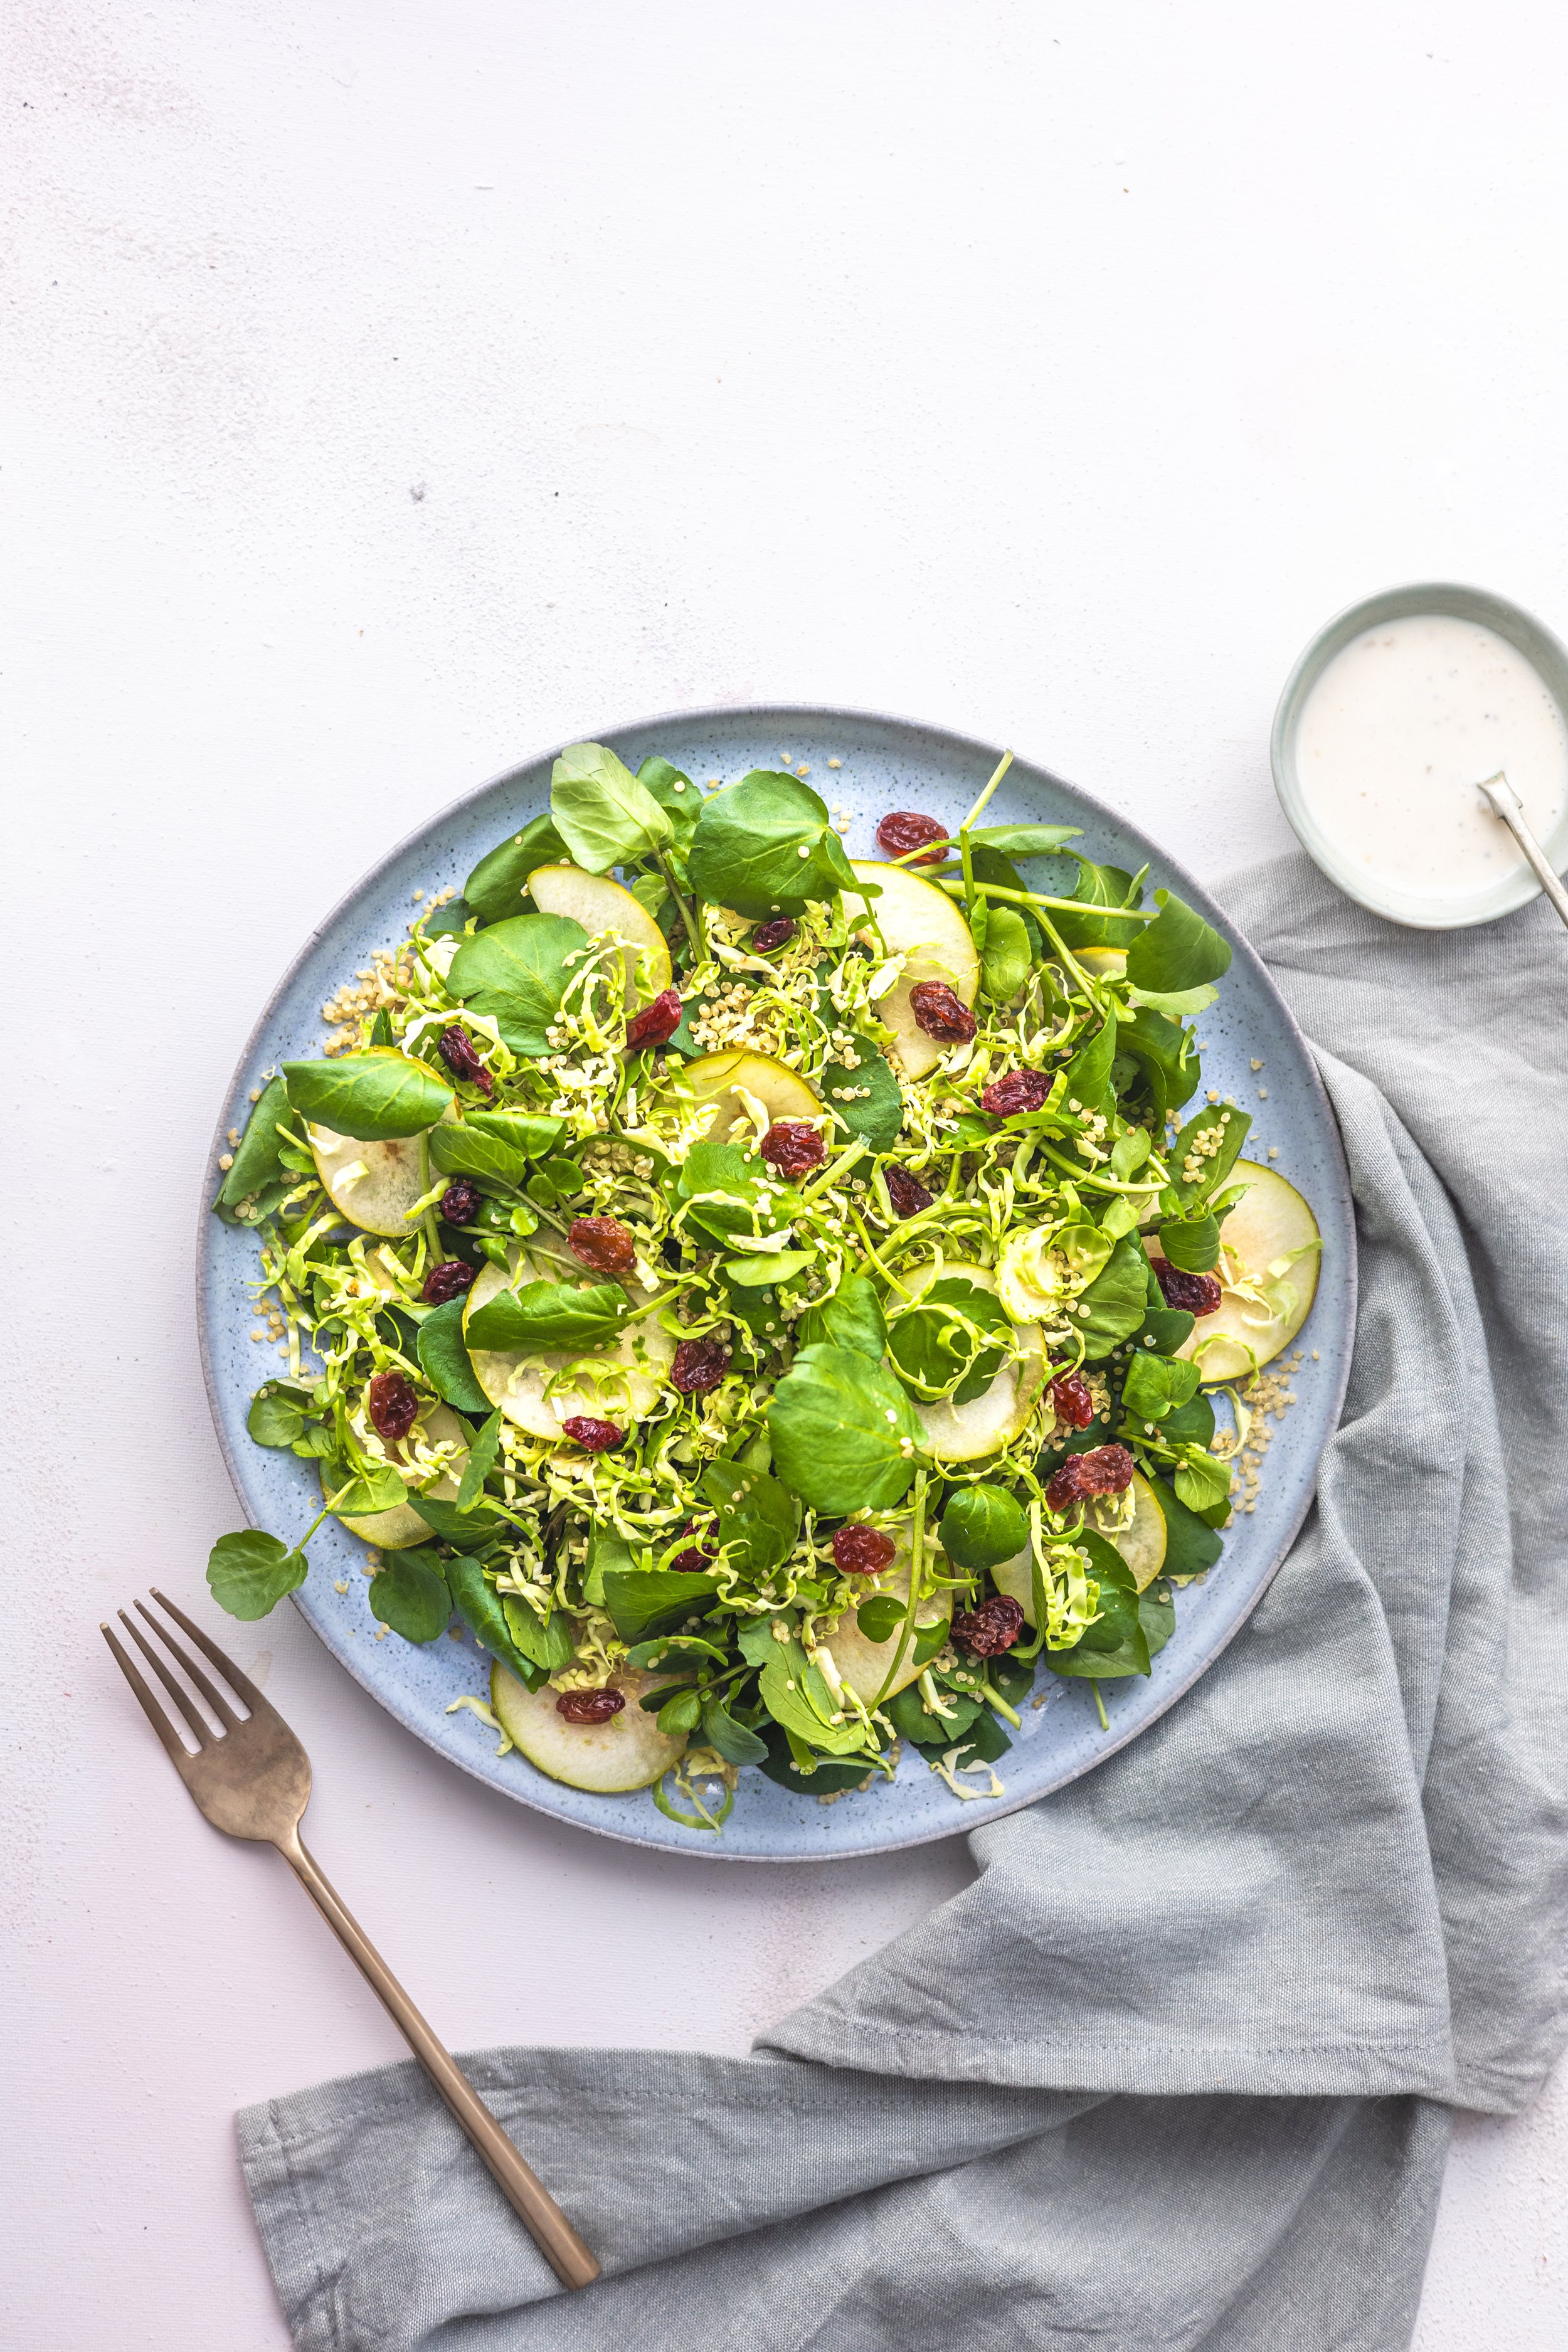 watercress-quinoa-shredded-brussel-sprout-salad-creamy-dressing-7925.jpg